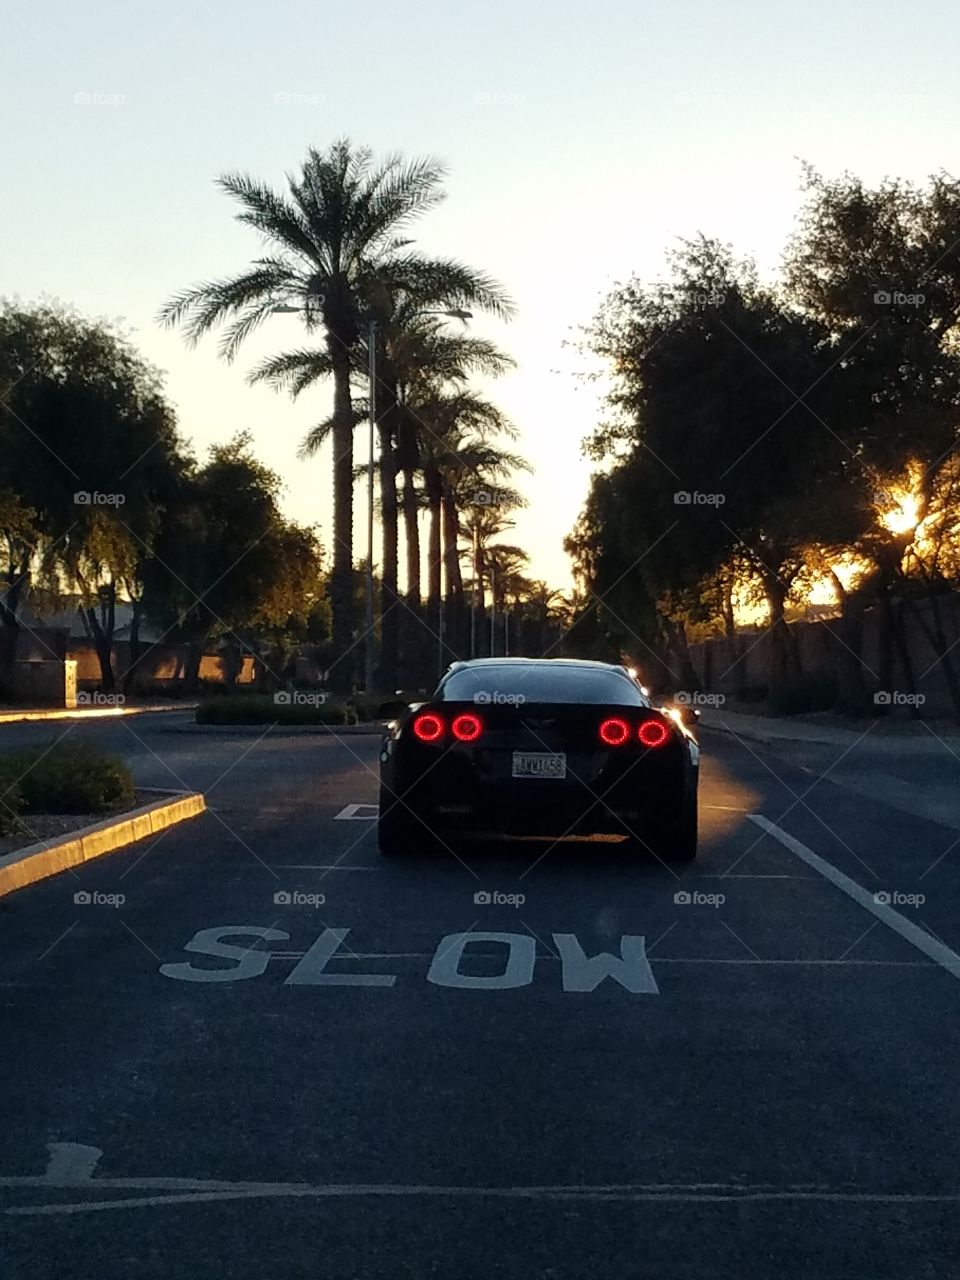 corvette palm trees road